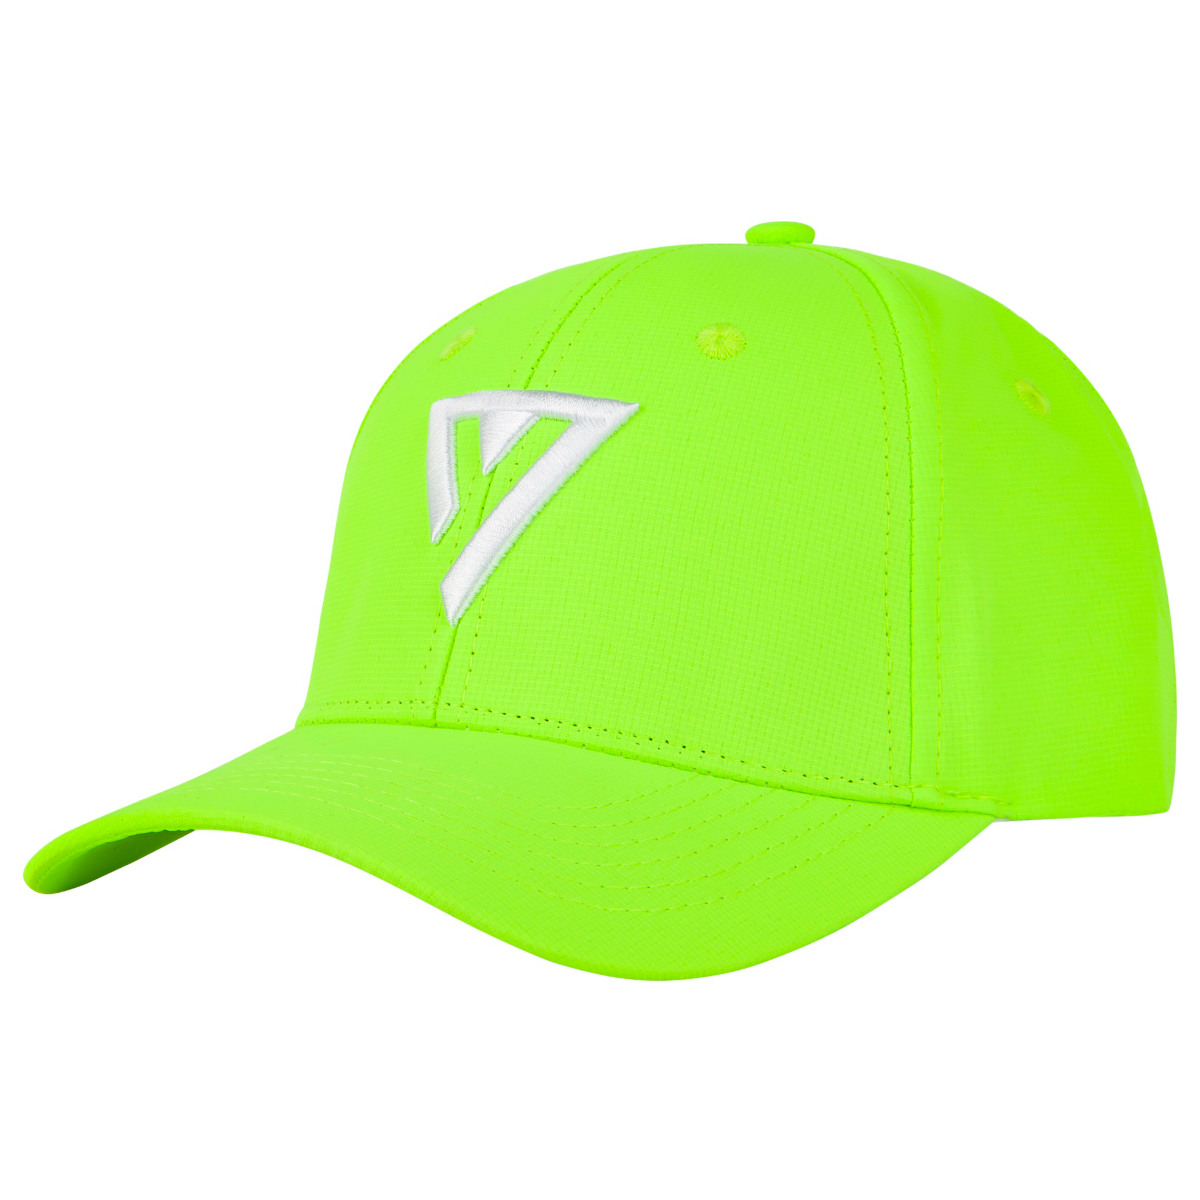 BYRG Ultimate Cap Green